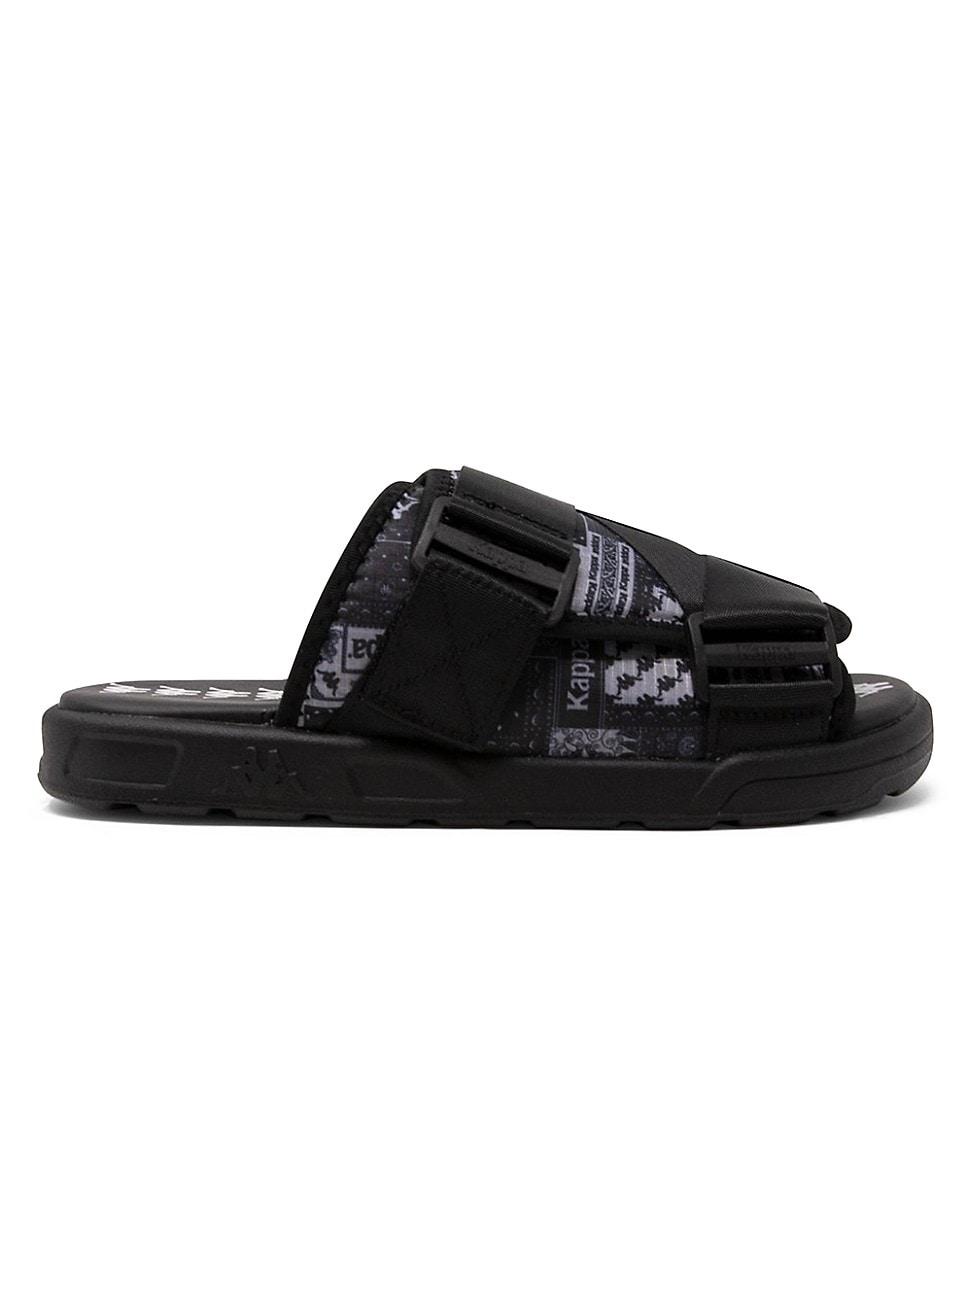 Kappa Synthetic Authentic Nuuk 1 Nylon Slide Sandals in Black Grey (Black)  for Men | Lyst